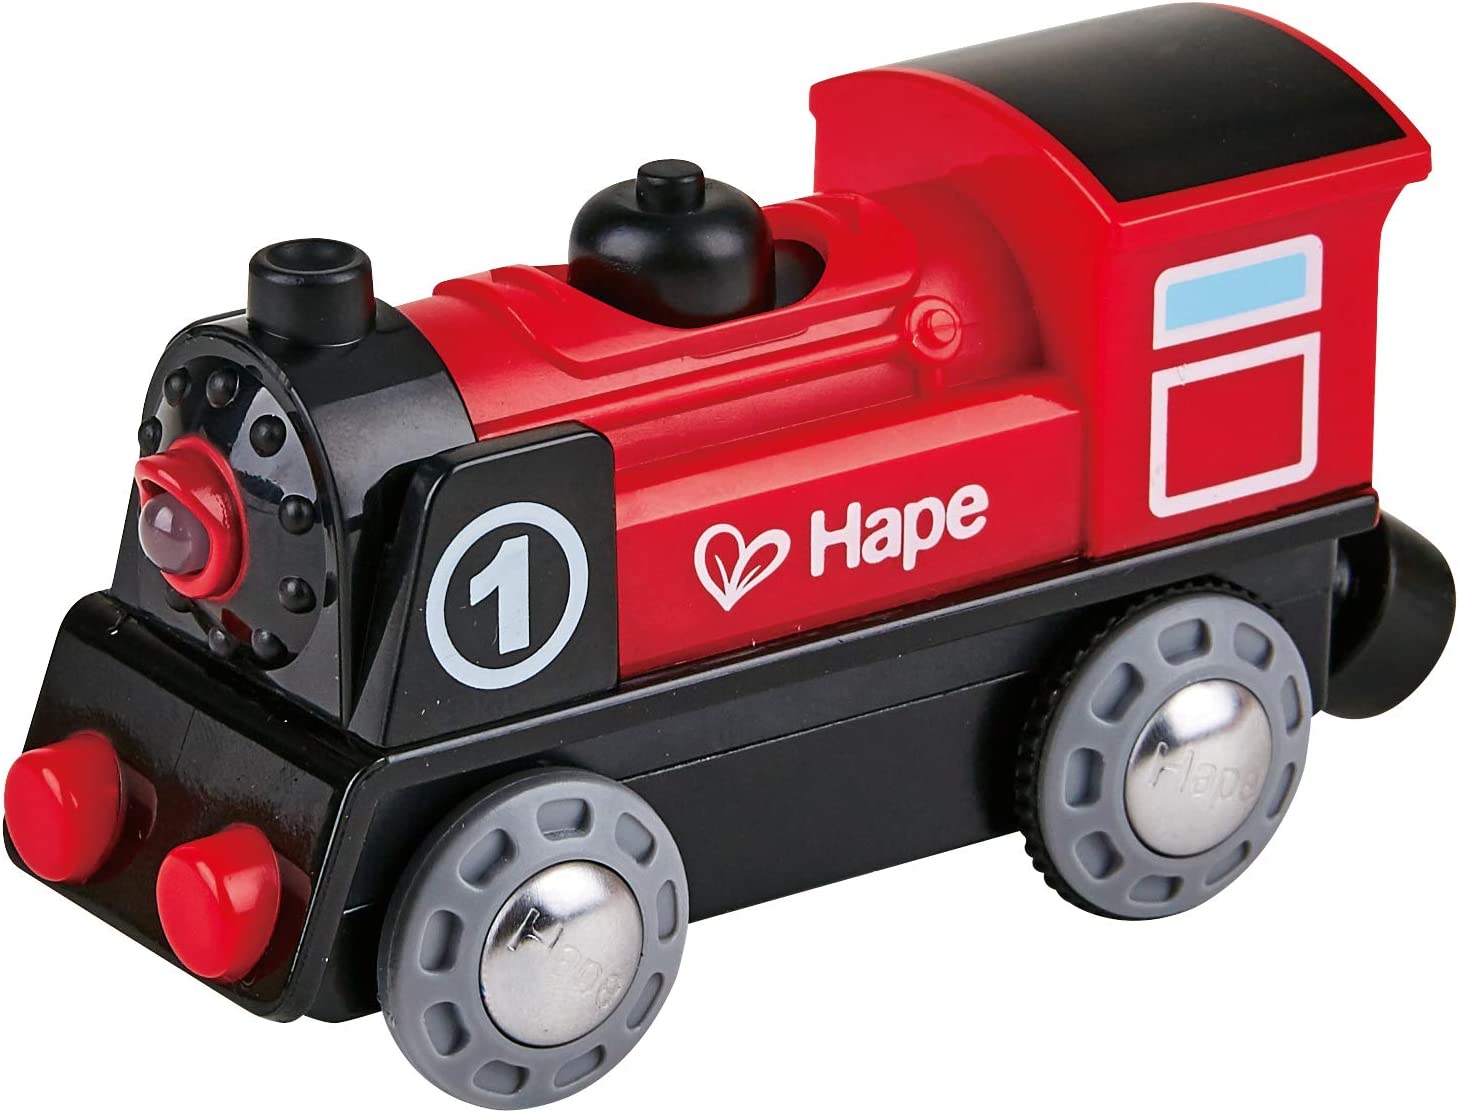 Hape Wooden Railway Battery Powered Engine No. 1 Kid's Train Set Red, White, Black, Blue, L: 3.7, W: 1.3, H: 1.9 inch